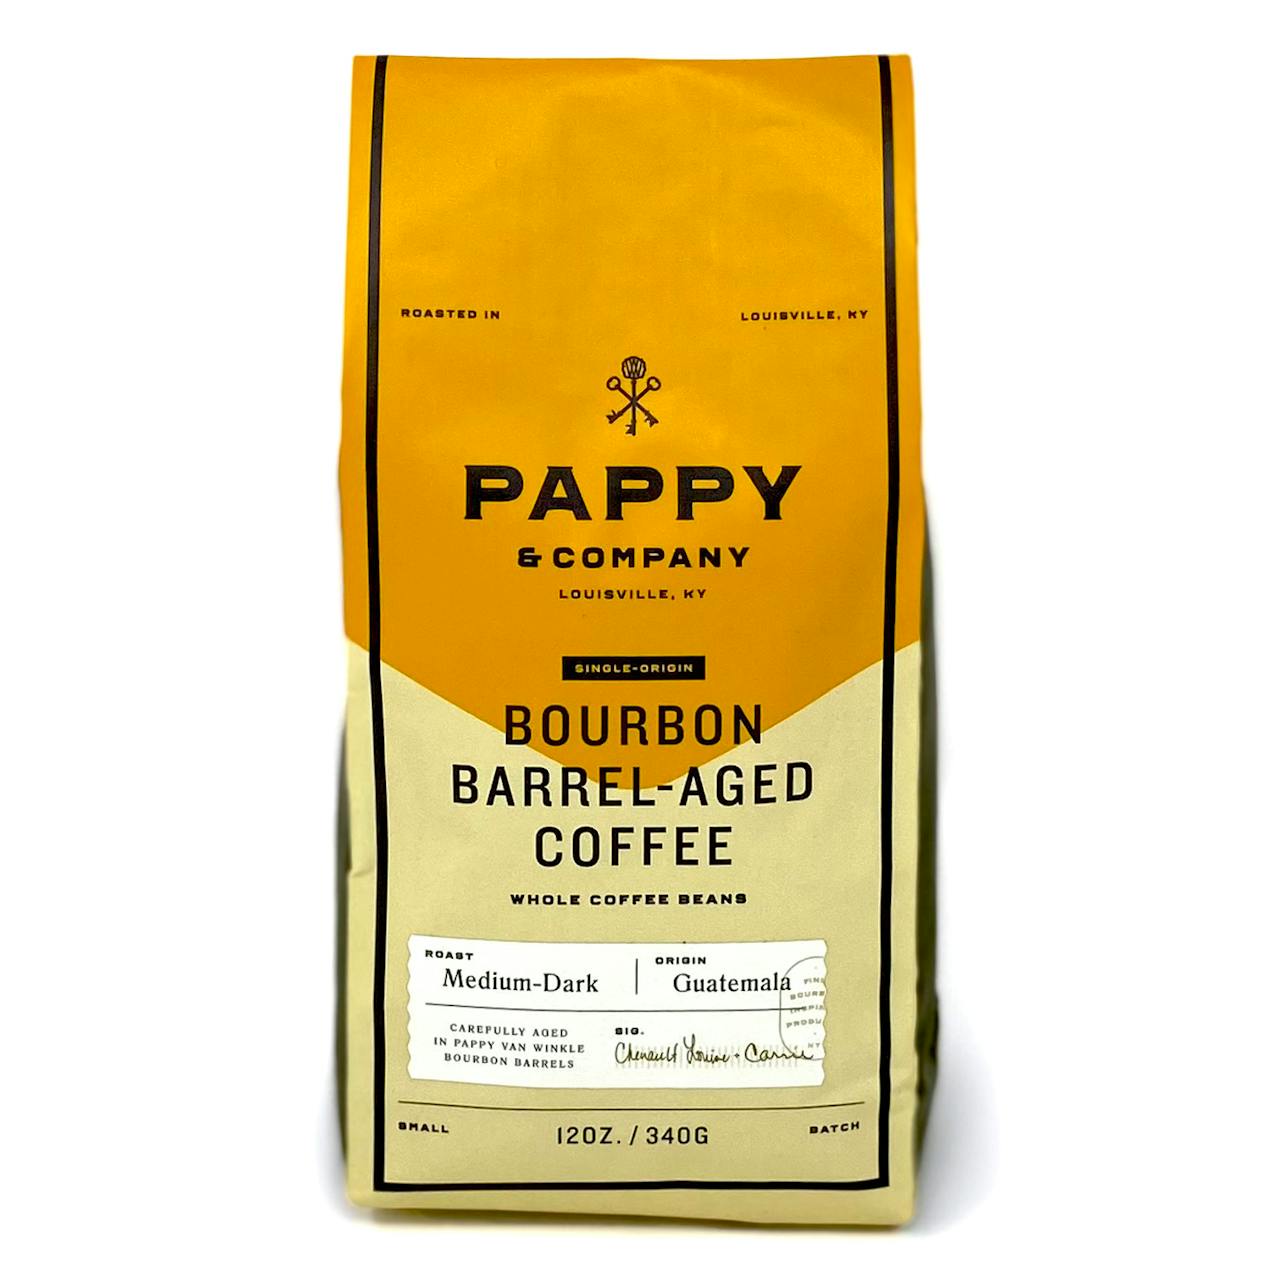 Pappy & Company Bourbon Barrel-Aged Coffee